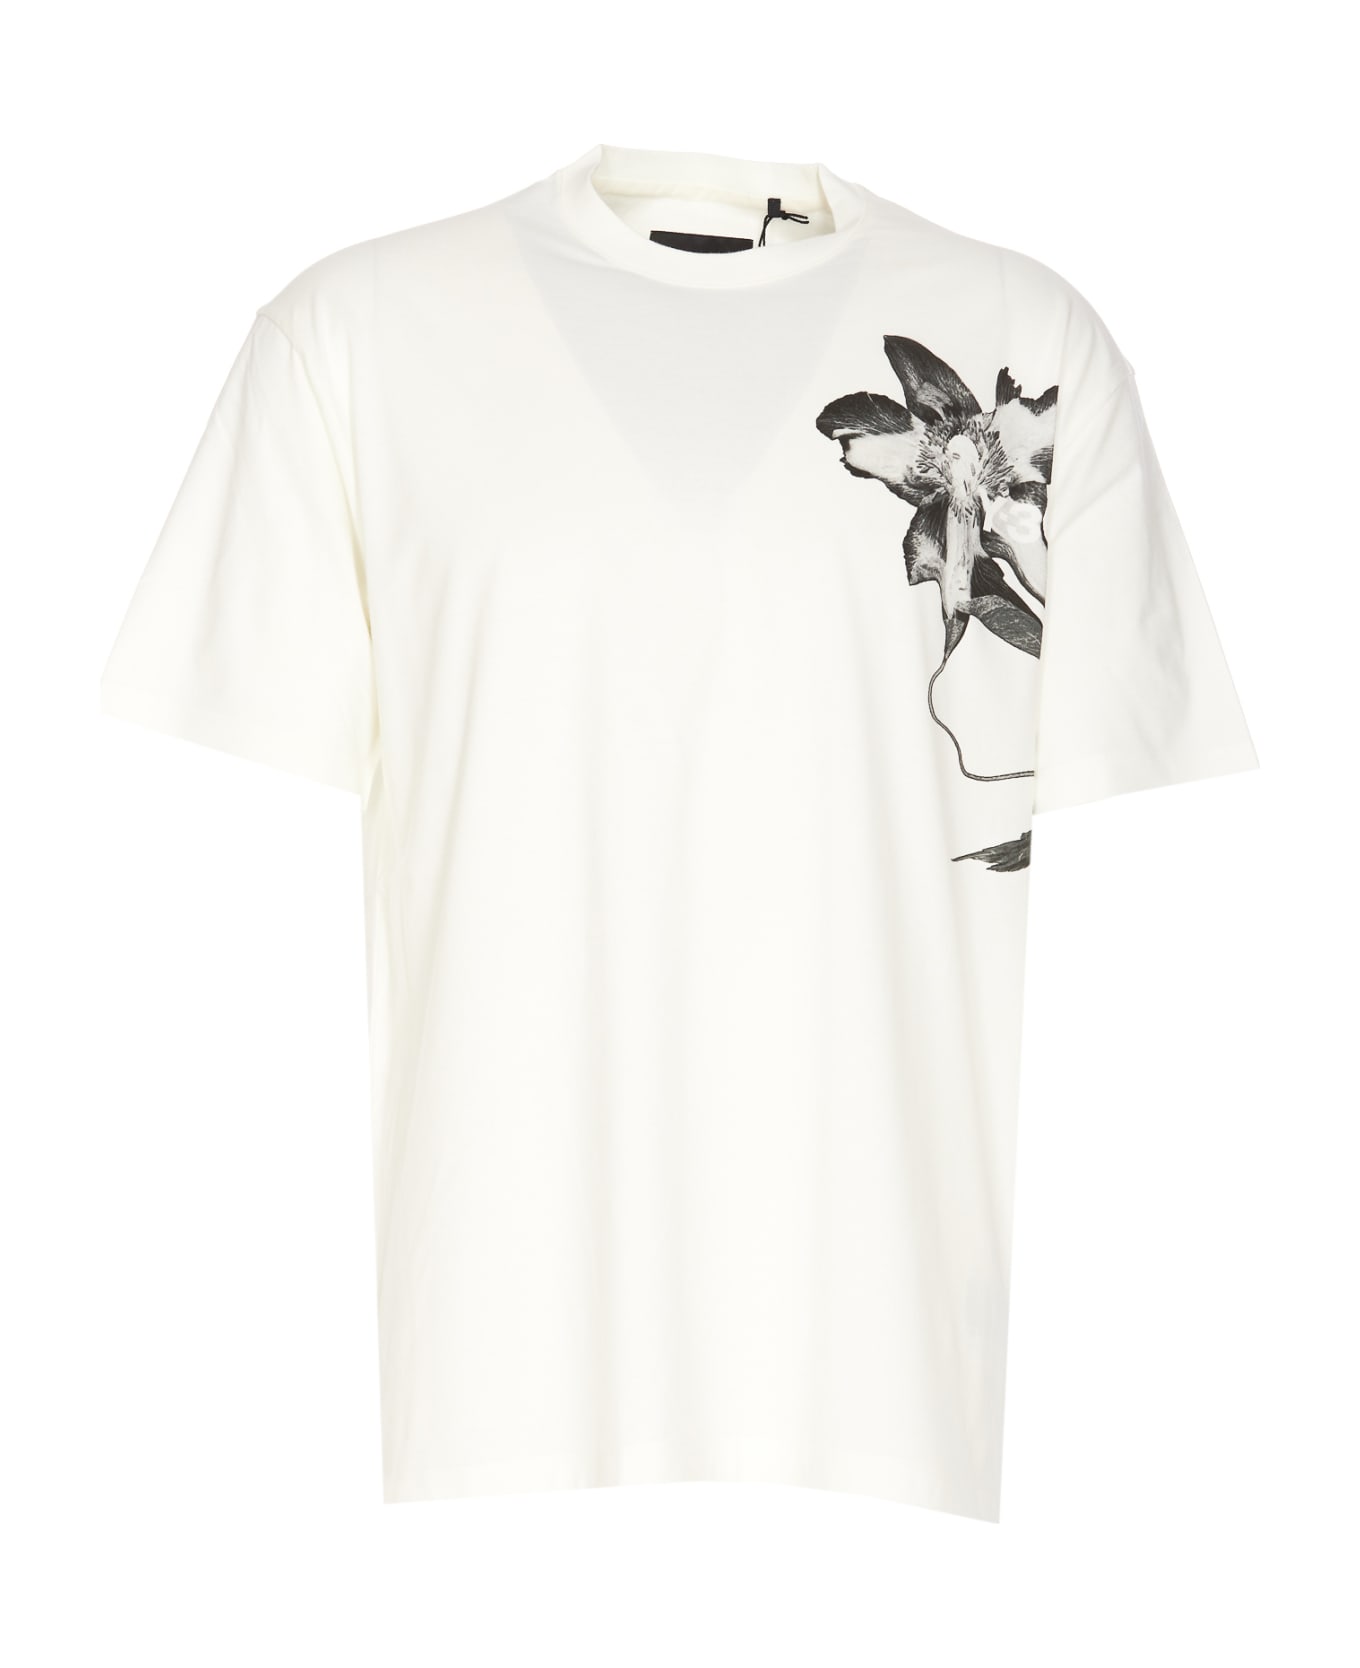 Y-3 Gfx T-shirt - WHITE